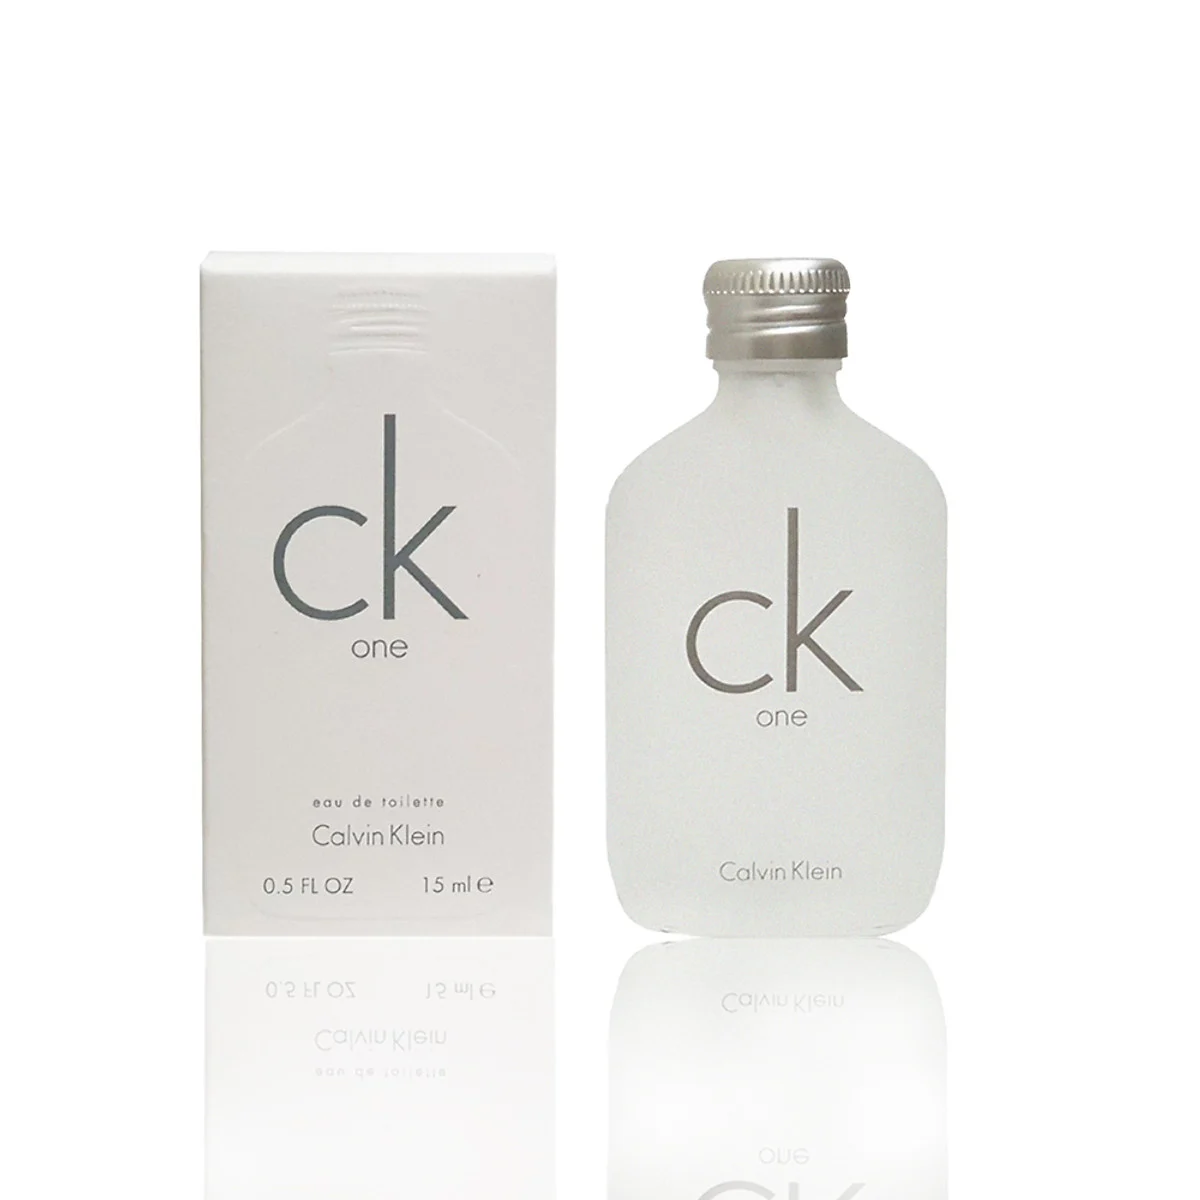 Hình 1 - Calvin Klein CK One EDT Mini Size 15ml